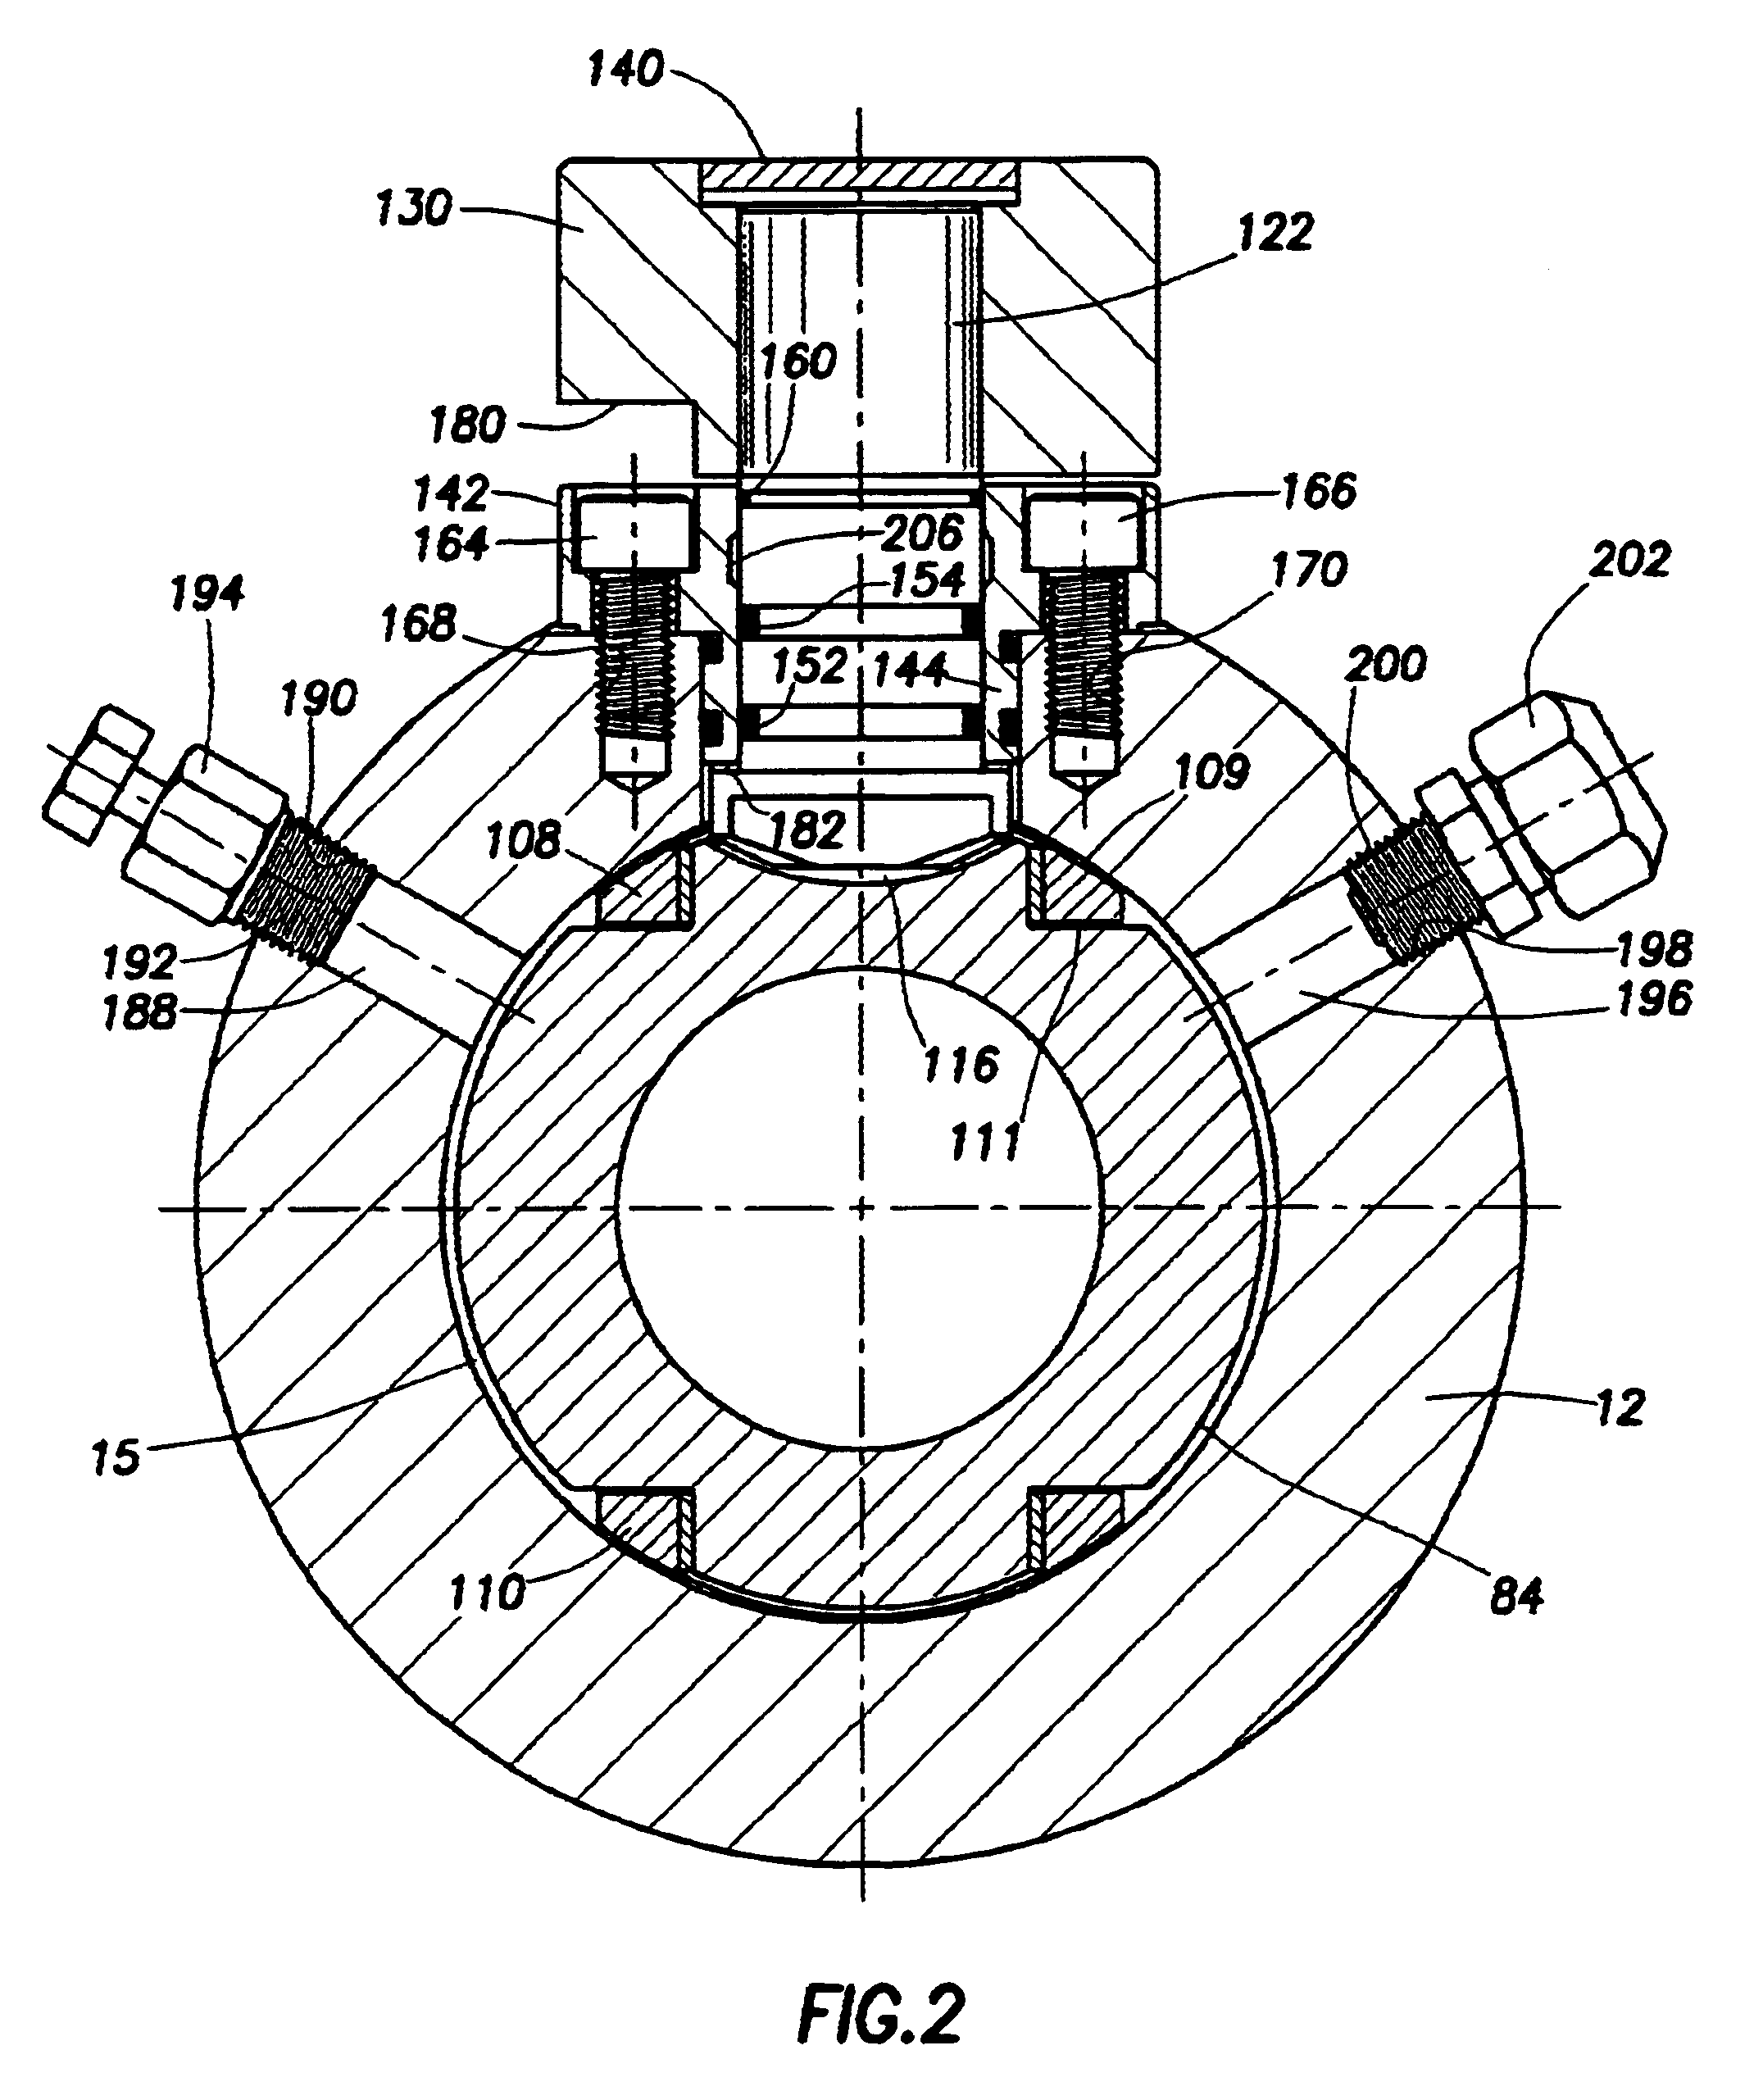 Compact manifold trunnion ball valve